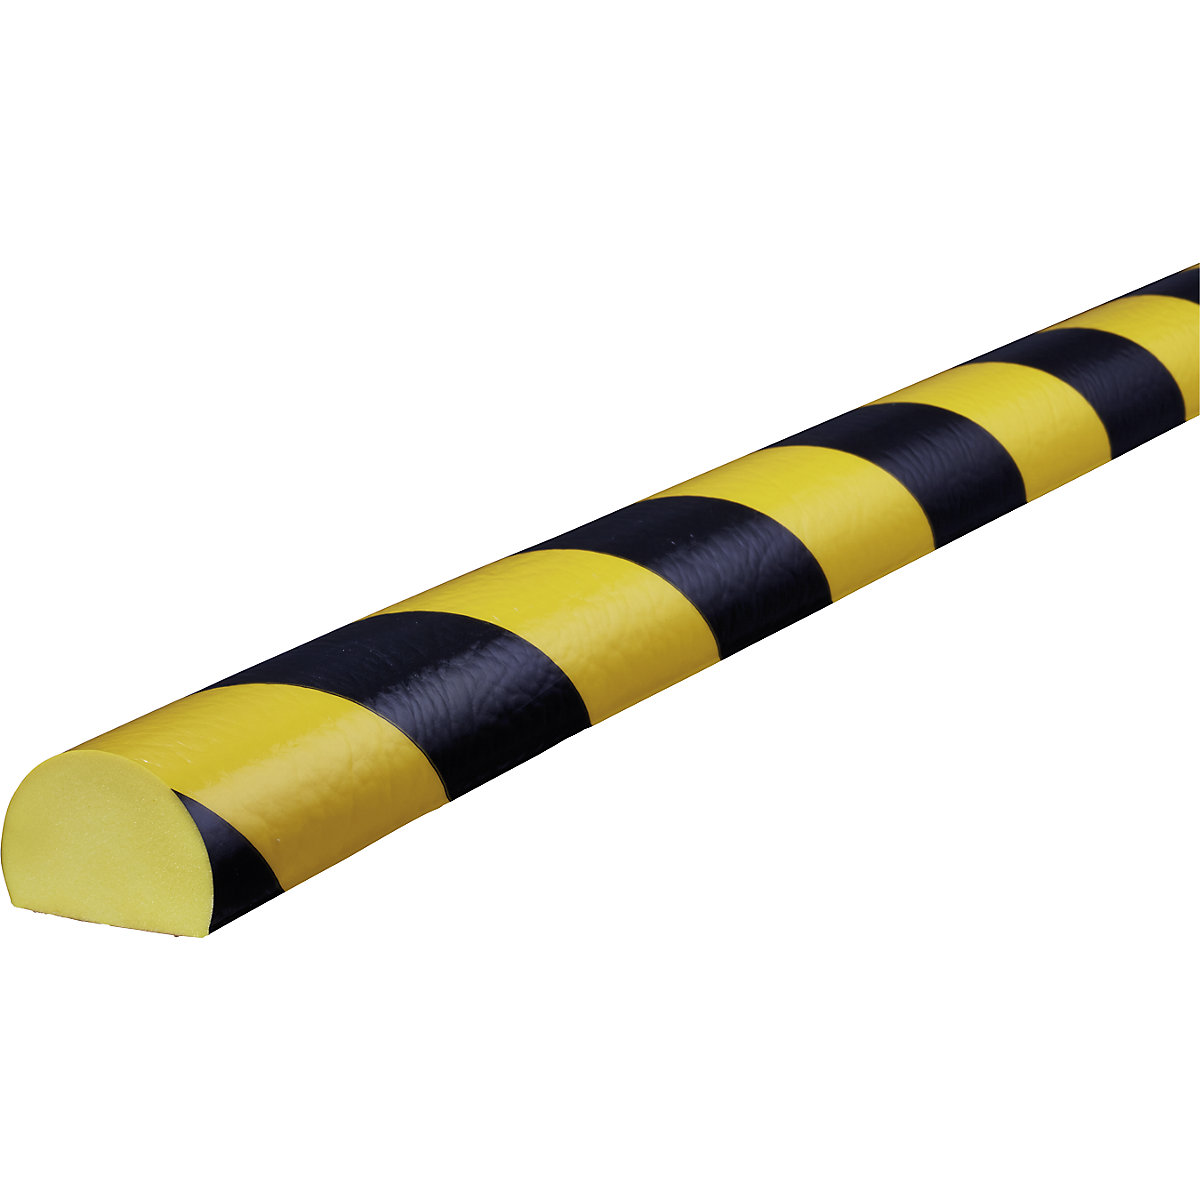 Knuffi®-oppervlaktebescherming – SHG, type C, stuk van 1 m, zwart/geel-18